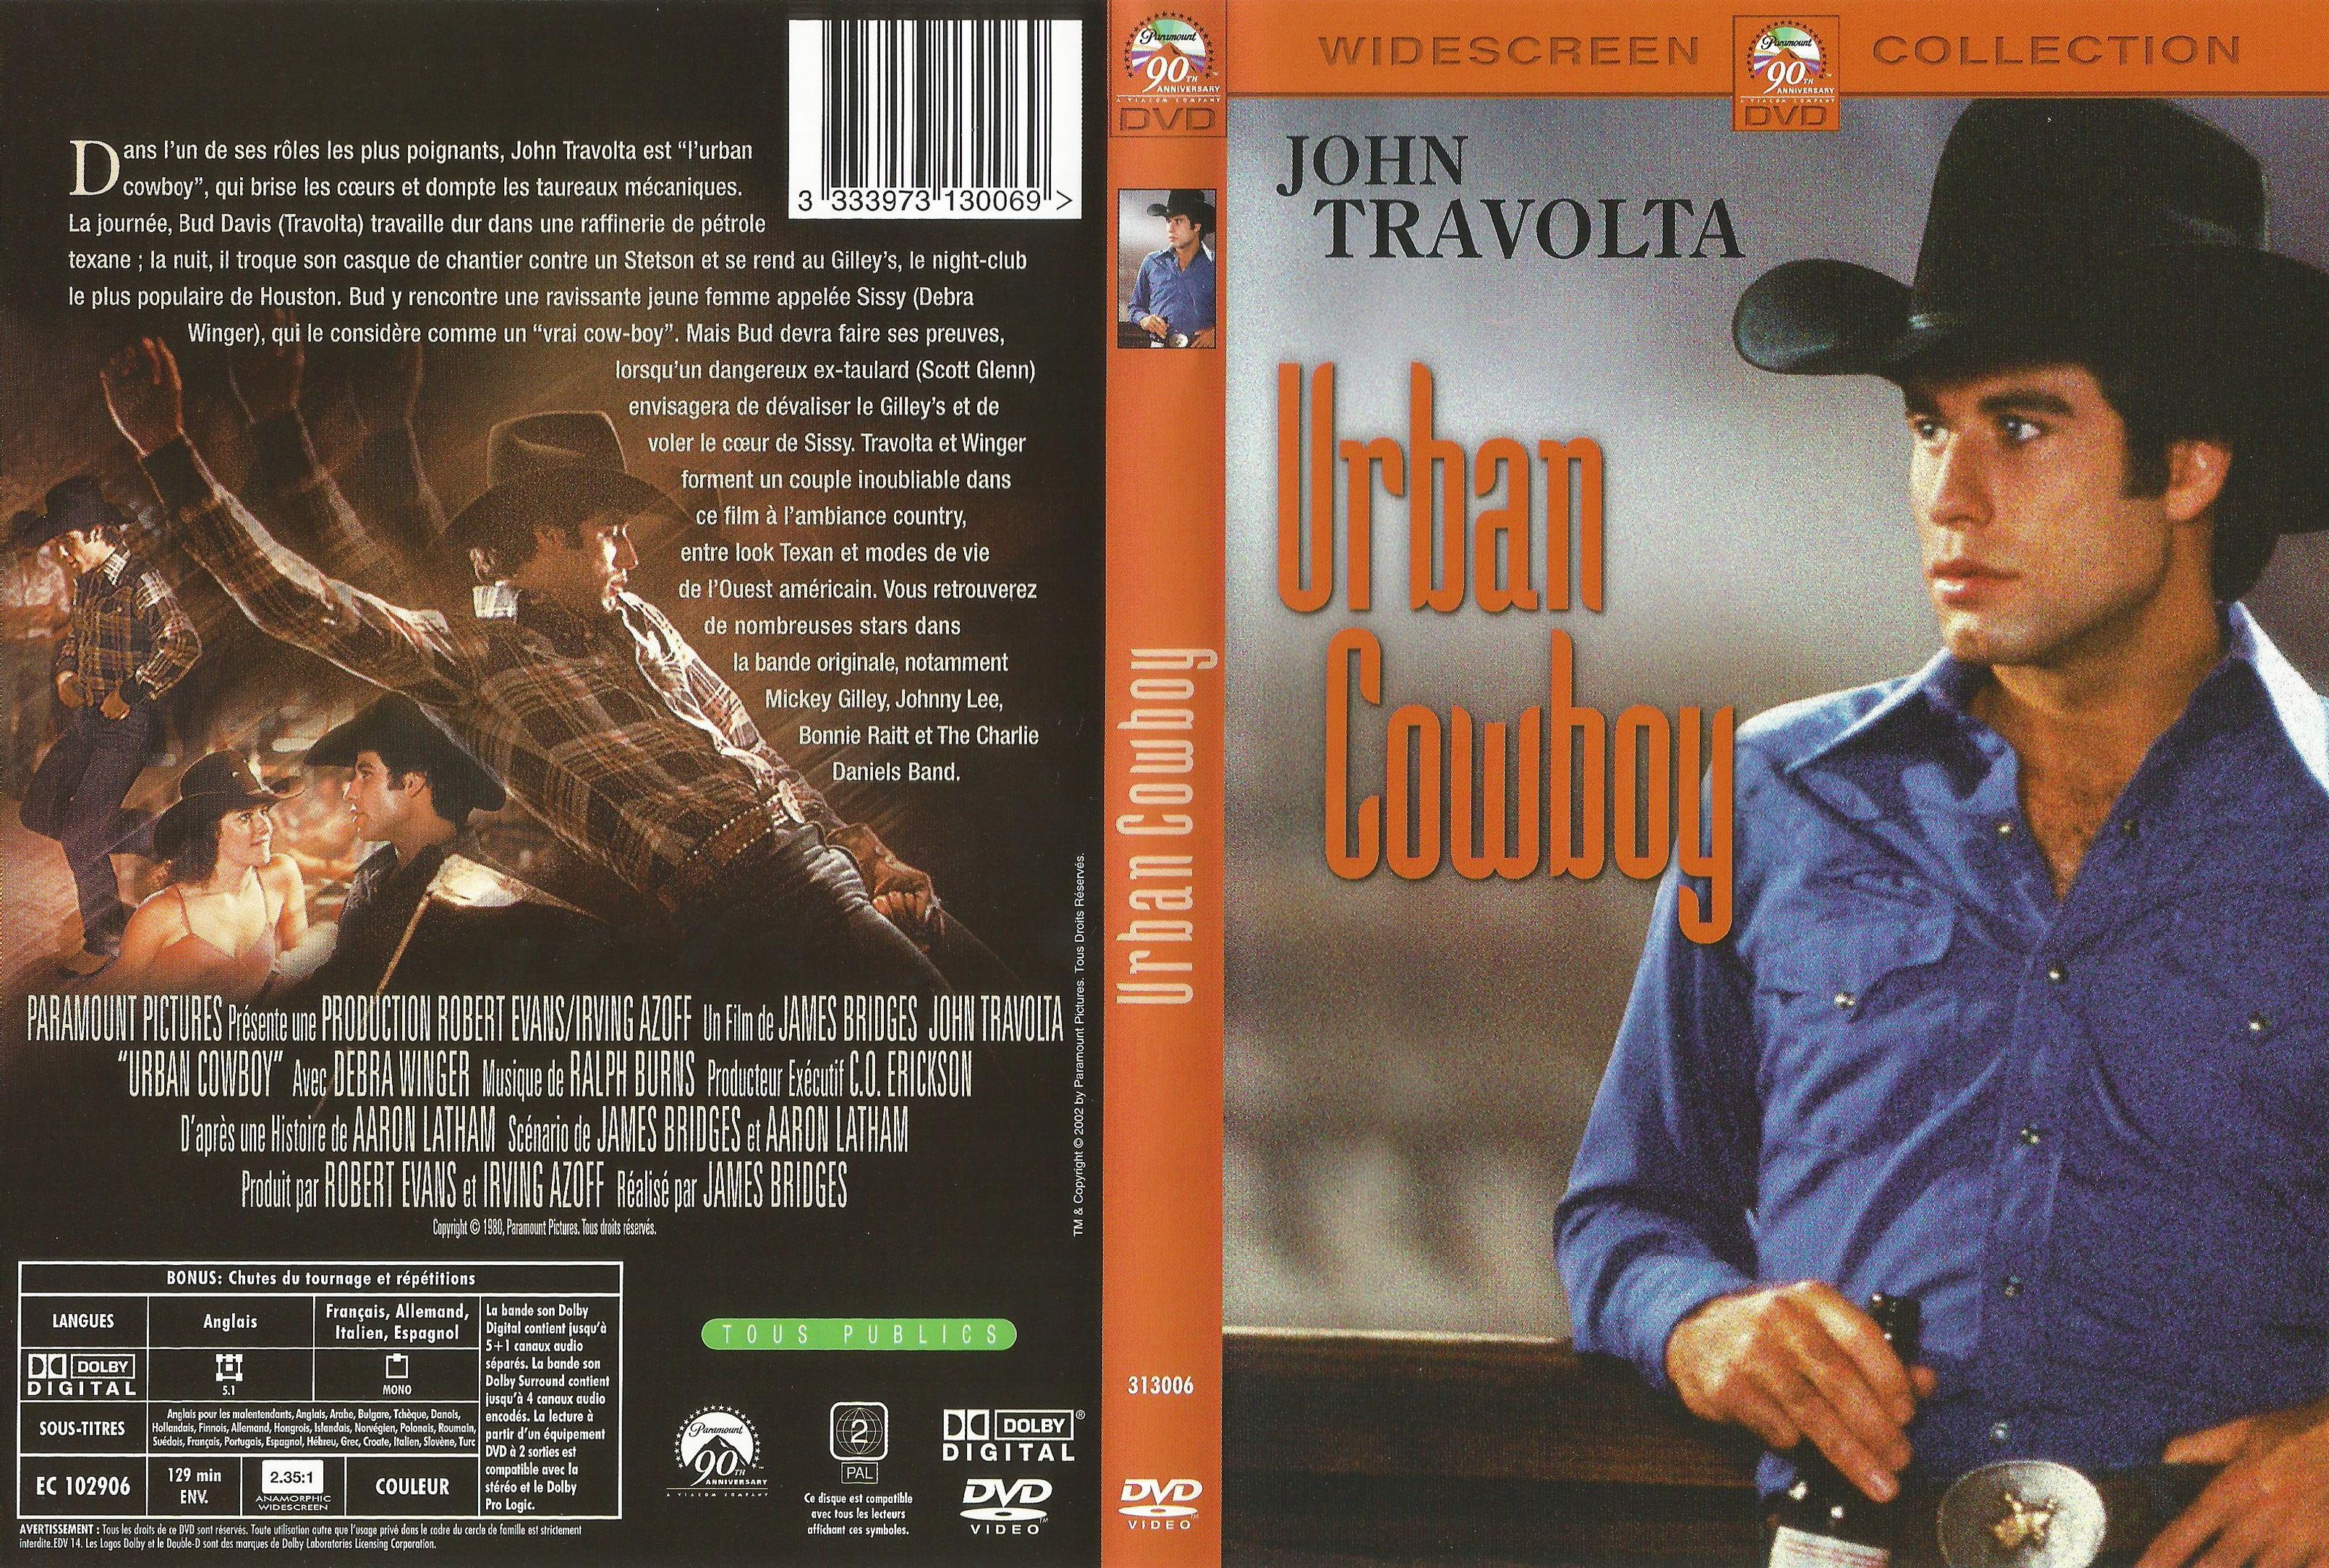 Jaquette DVD Urban cowboy